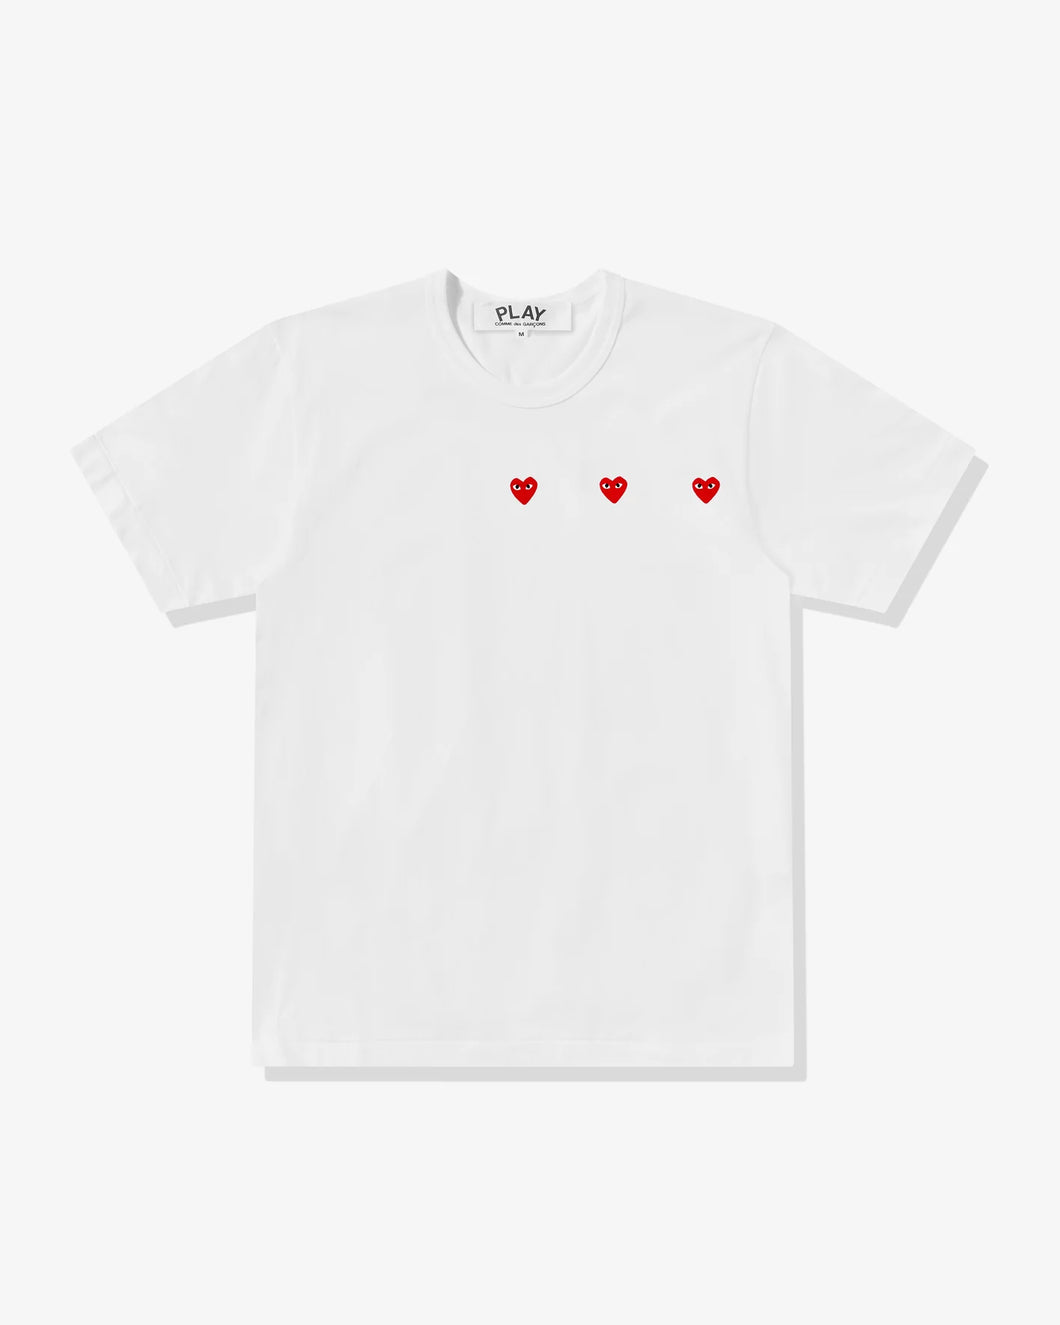 PLAY Comme des Garçons Multi Red Heart T-Shirt (White)